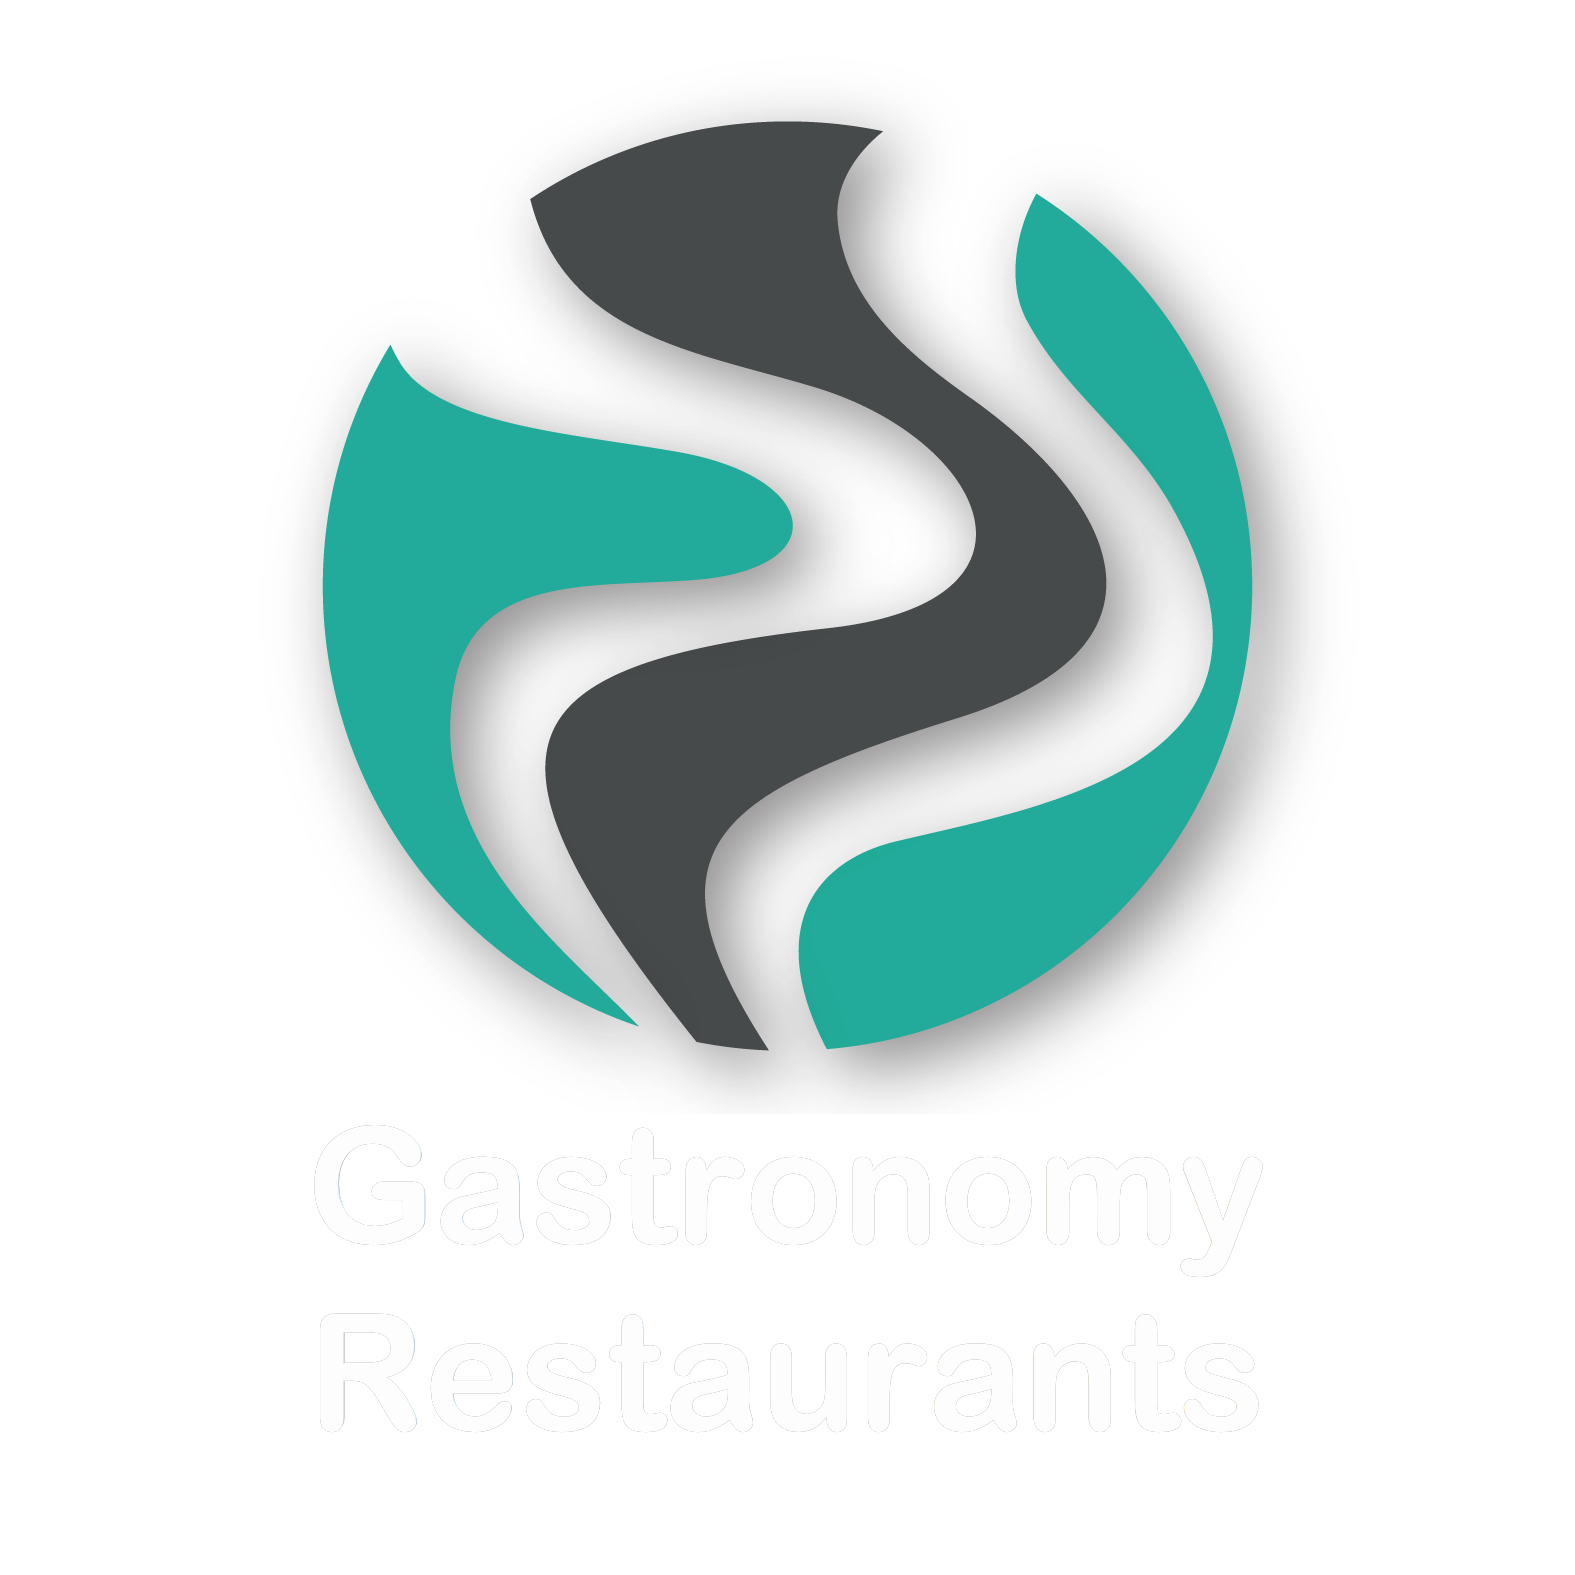 Gastronomy Foods UK Ltd